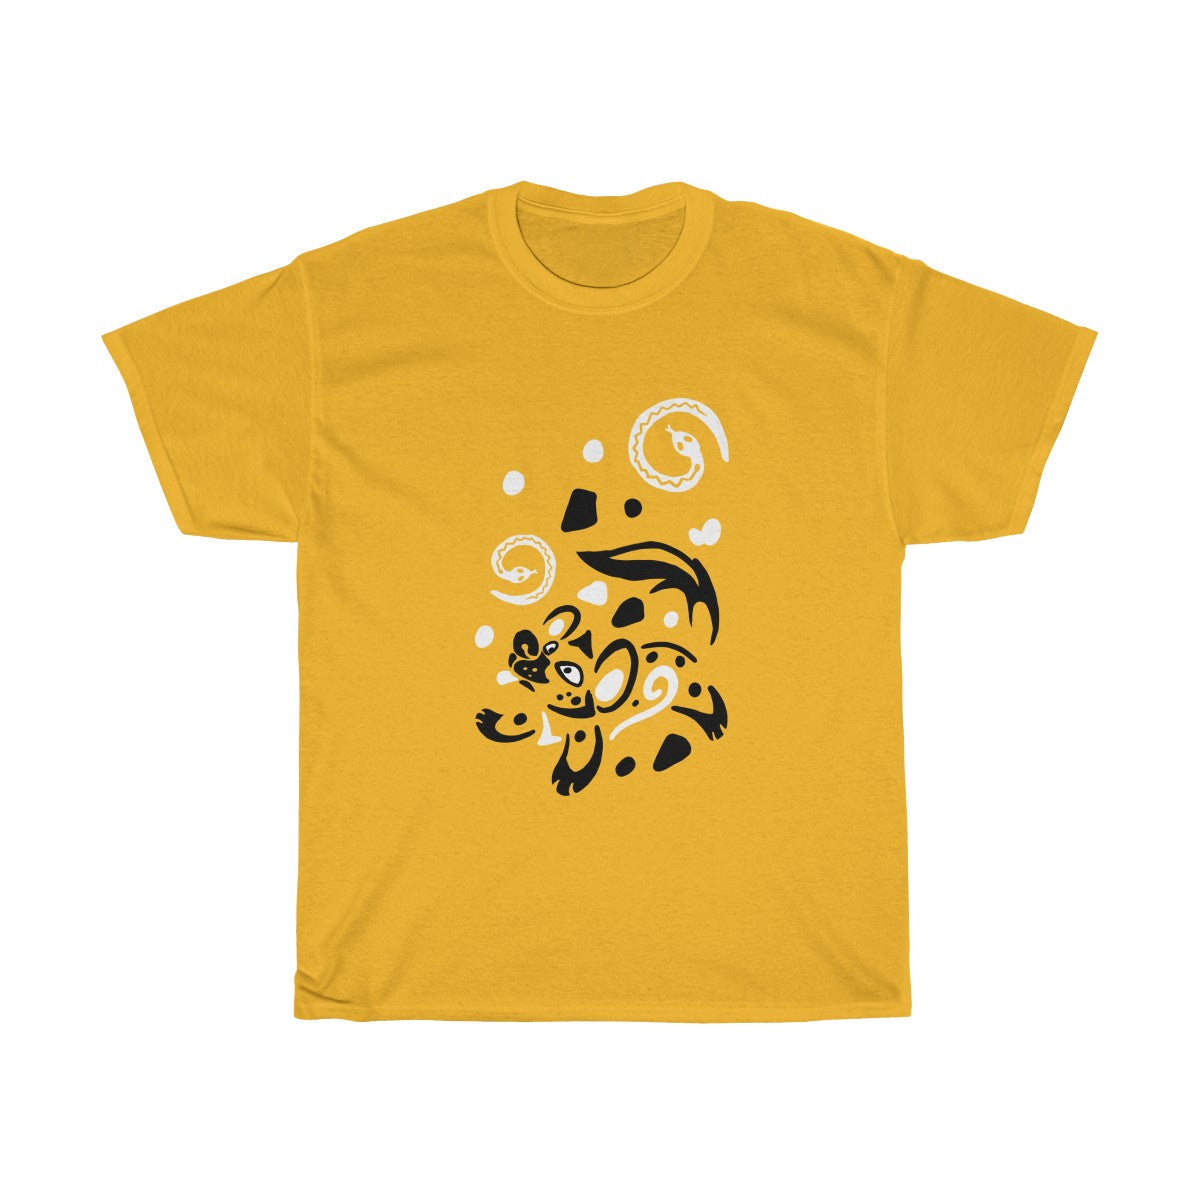 Yeens & Sneks - T-Shirts T-Shirt Dire Creatures Gold S 